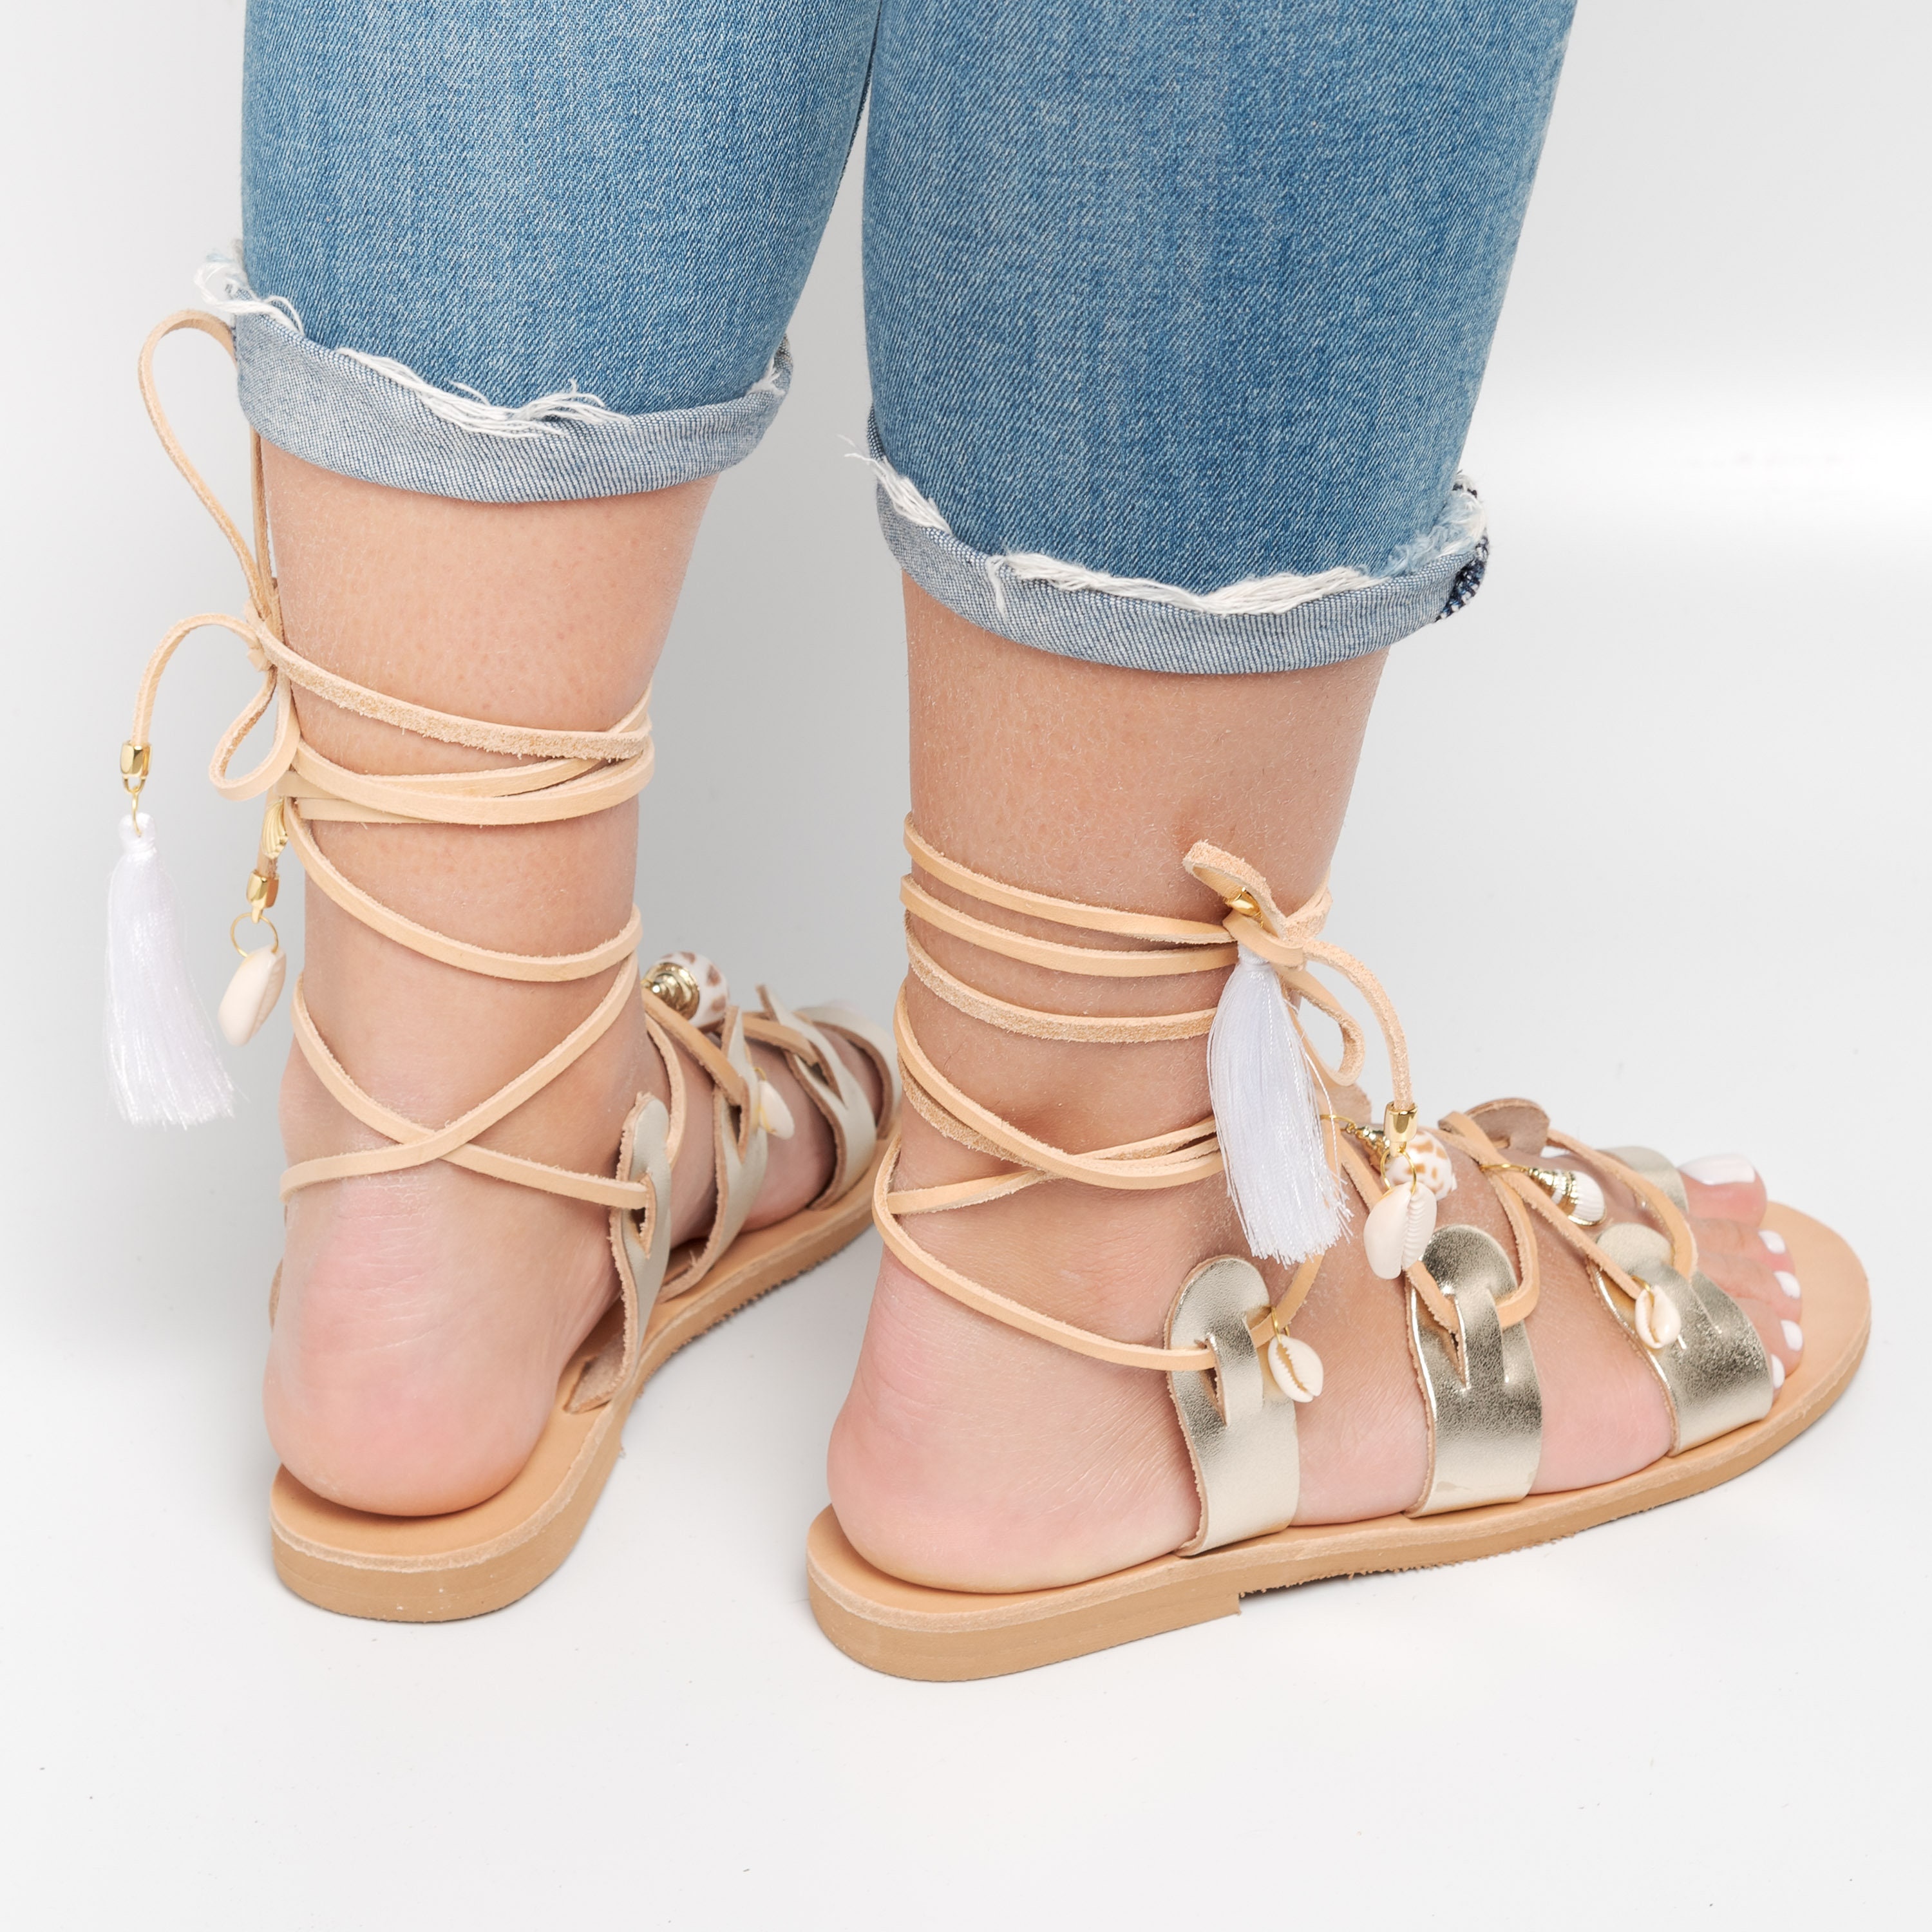 Lace up sandals Pompom sandals Leather sandals | Etsy